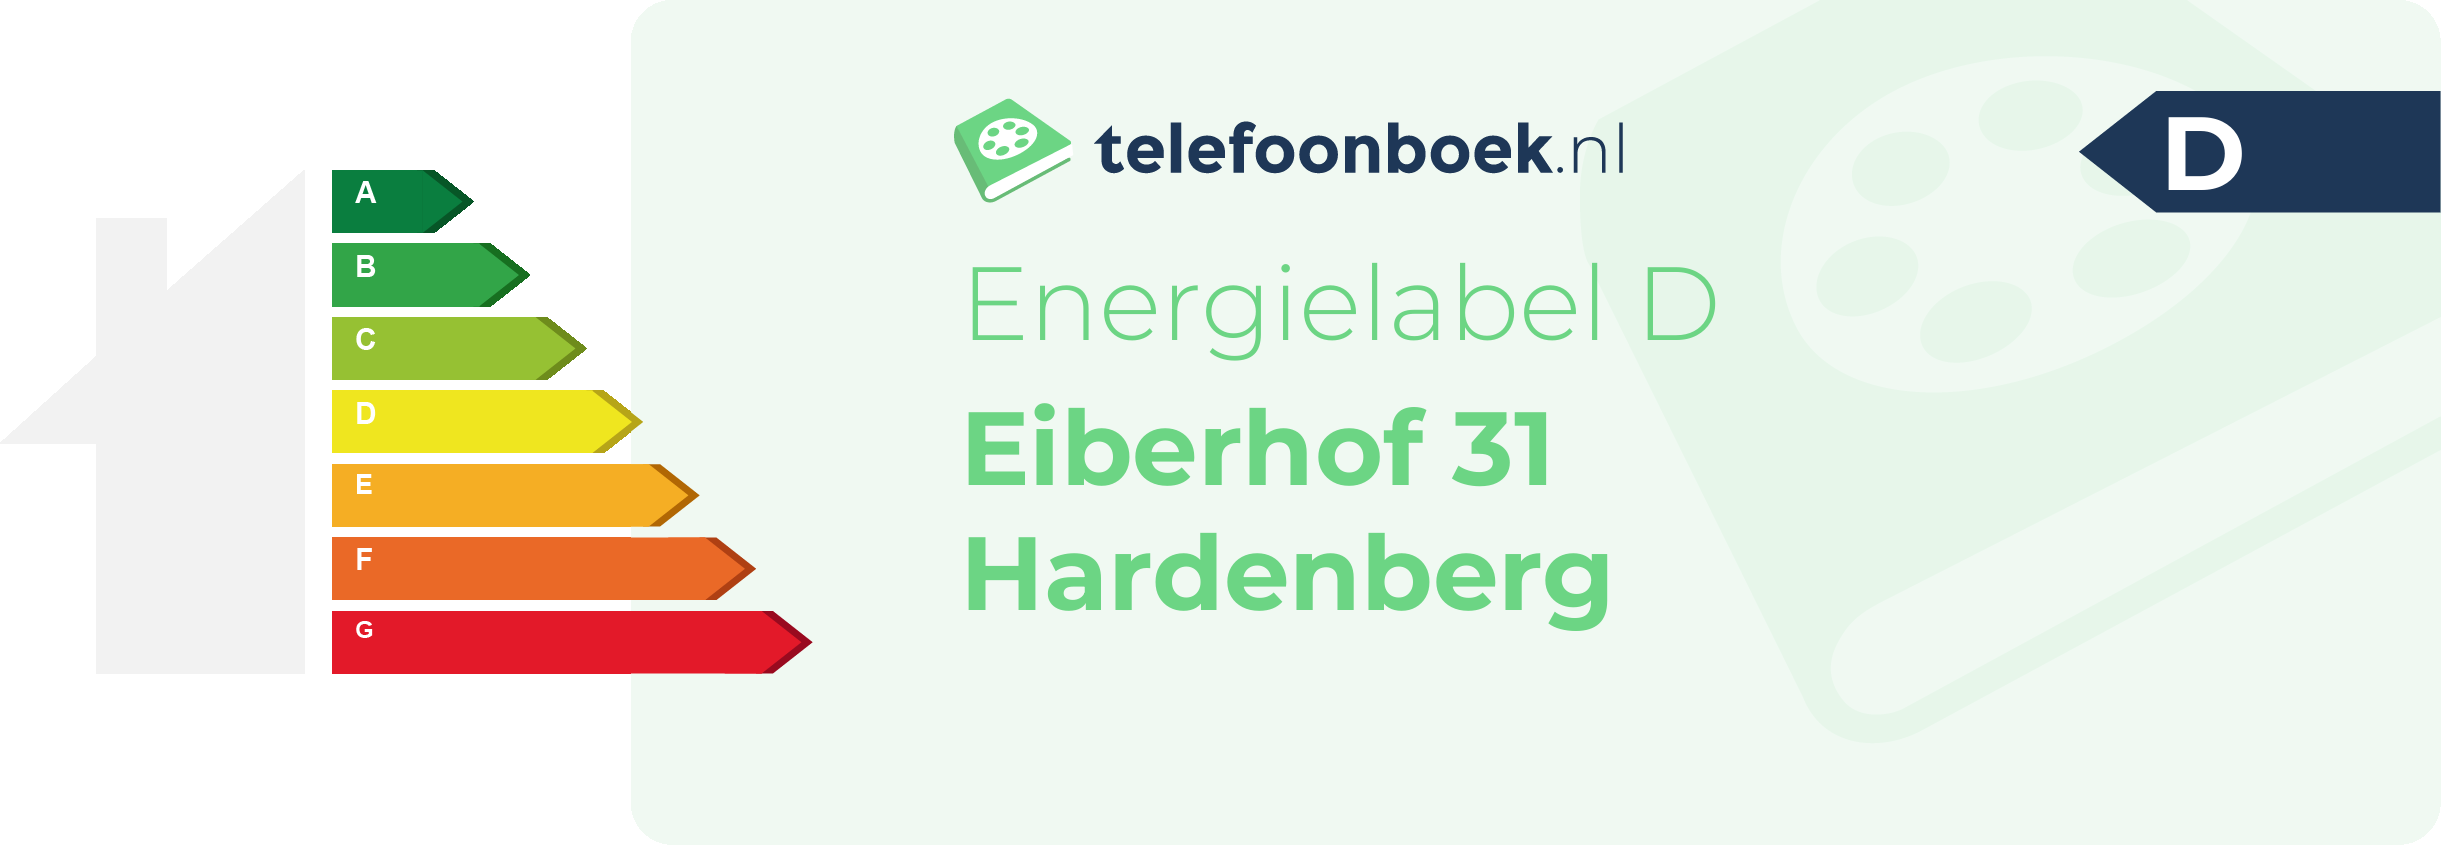 Energielabel Eiberhof 31 Hardenberg